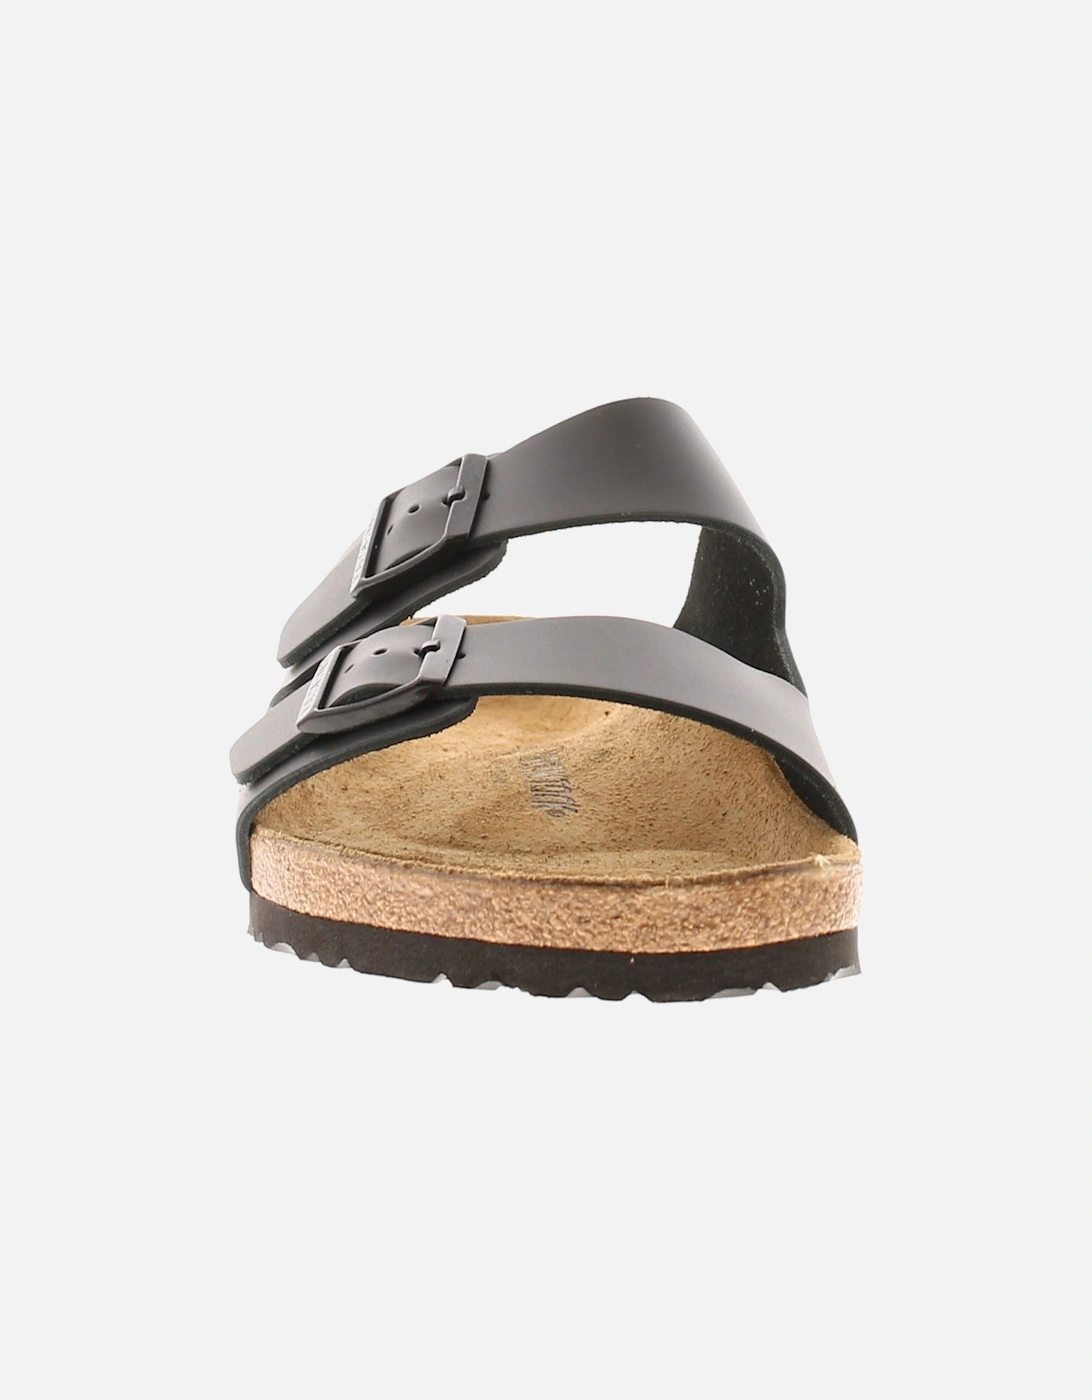 Birkenstock Womens Flat Sandals Arizona Buckle black UK Size